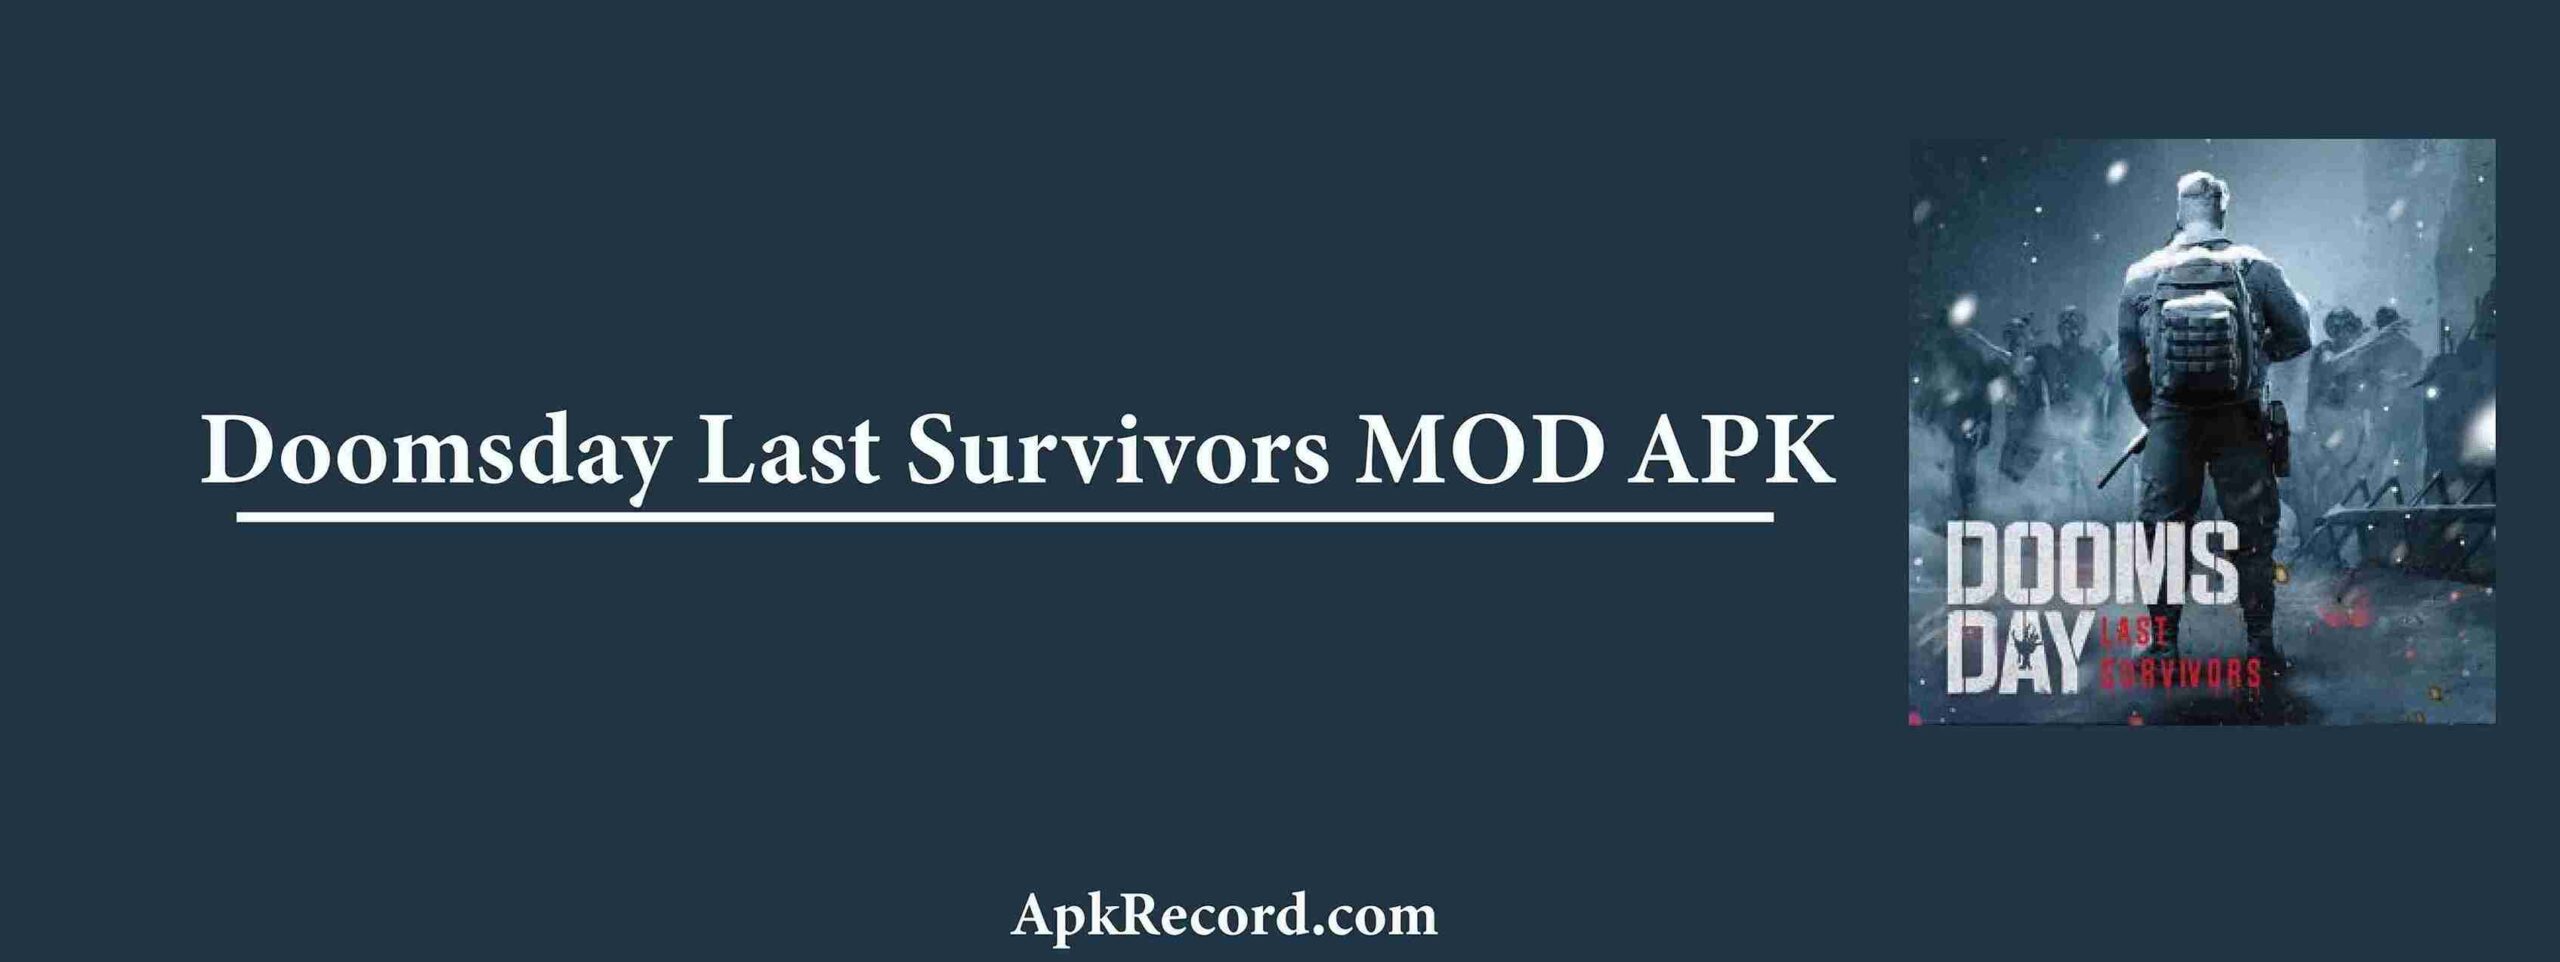 Doomsday Last Survivors MOD APK V1.27.0